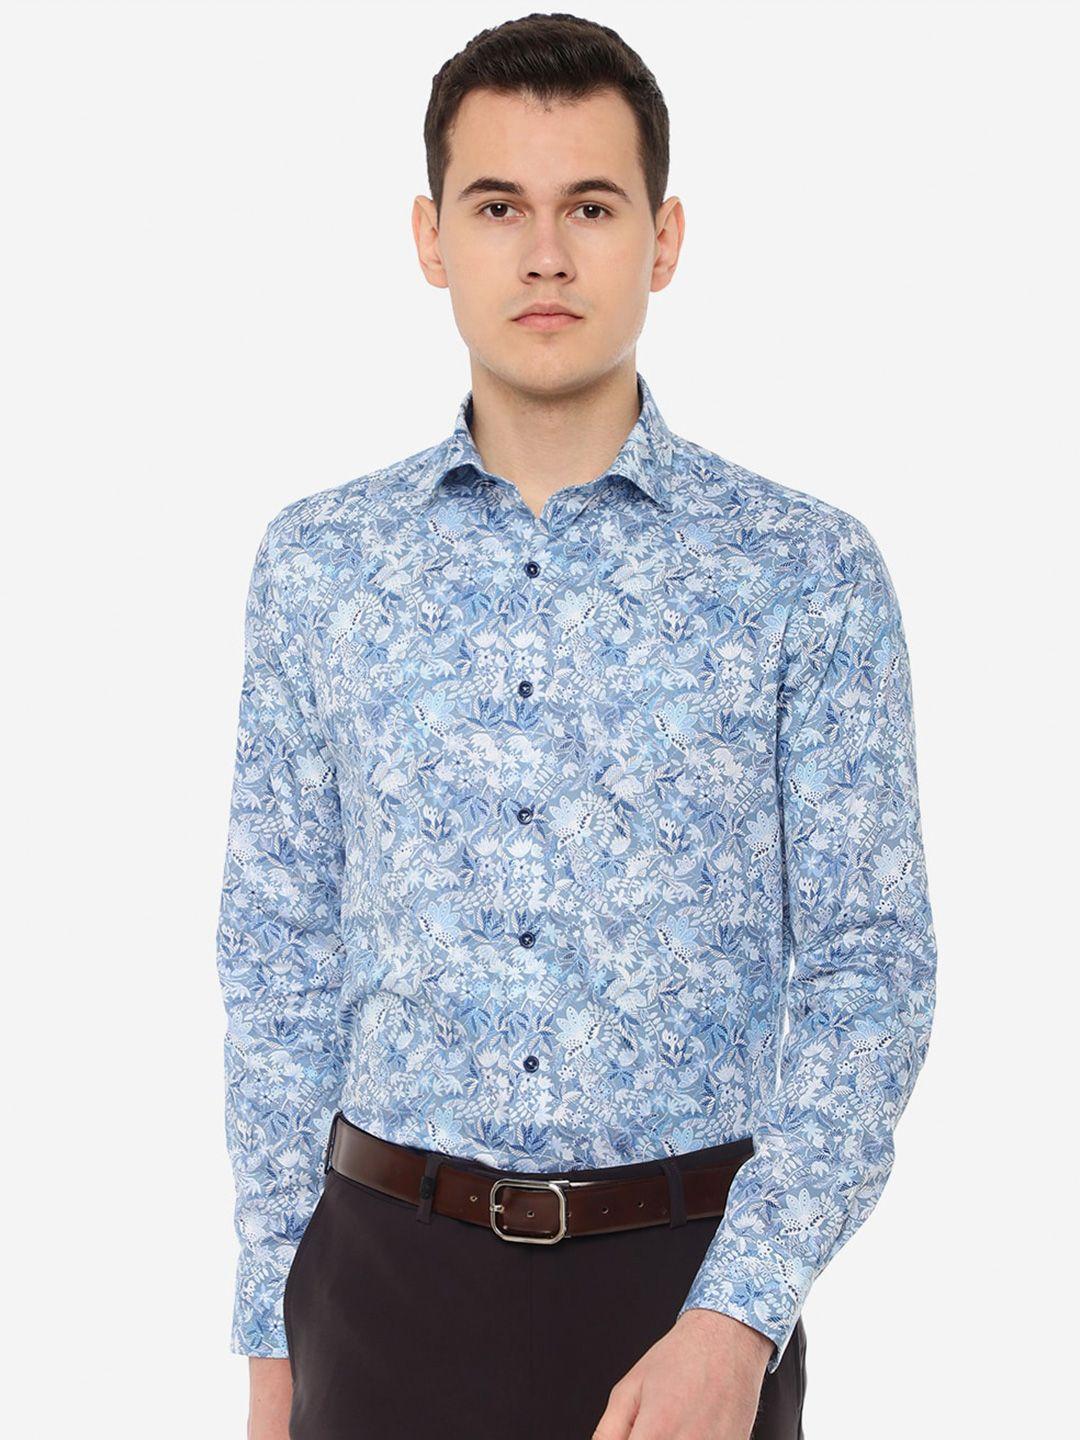 jb studio slim fit floral printed cotton casual shirt